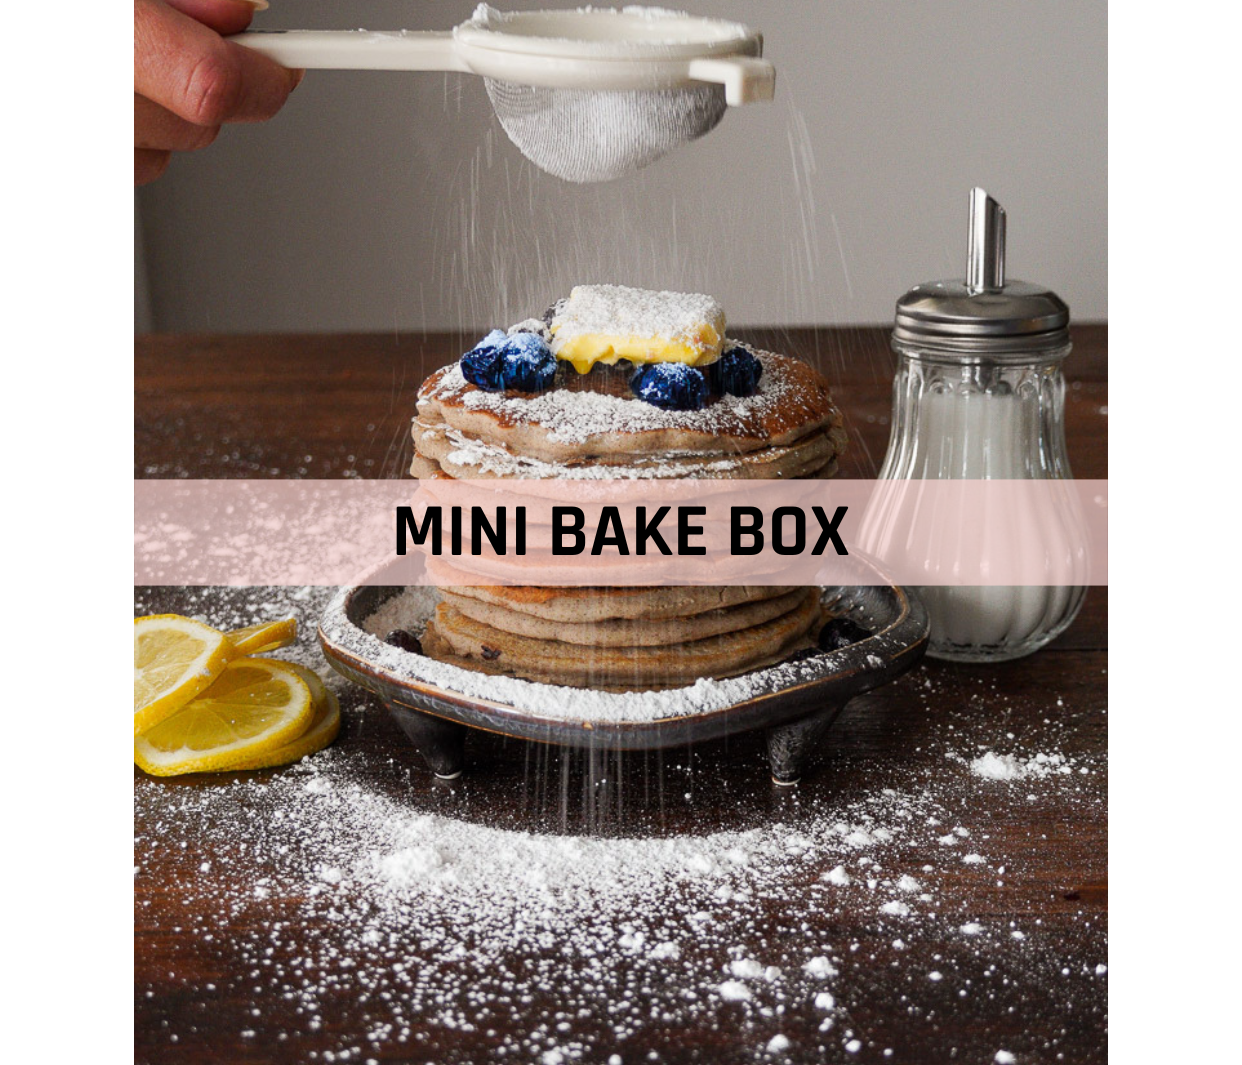 The Mini Bake Box